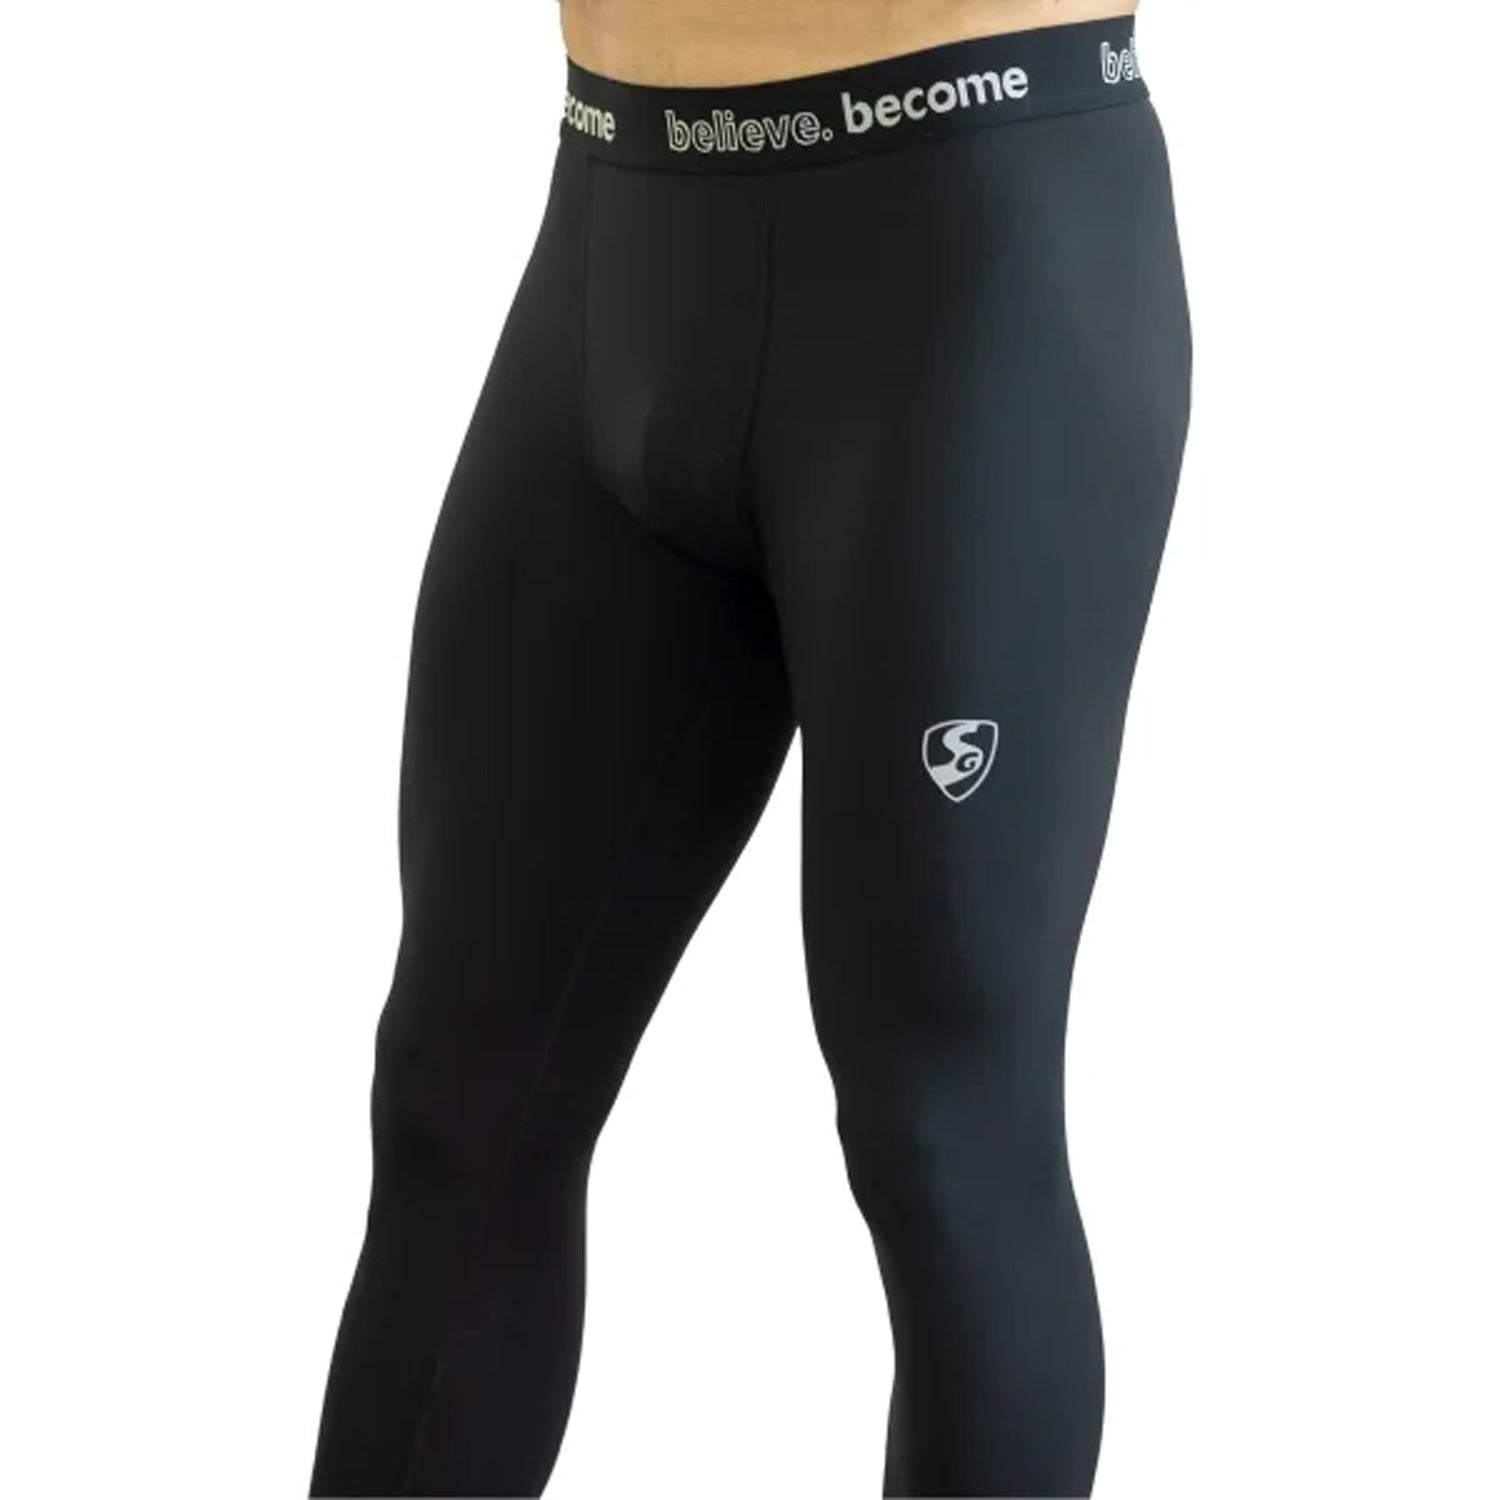 SG Cricket Compression Xtreme Bodywear Pant, Black - Best Price online Prokicksports.com